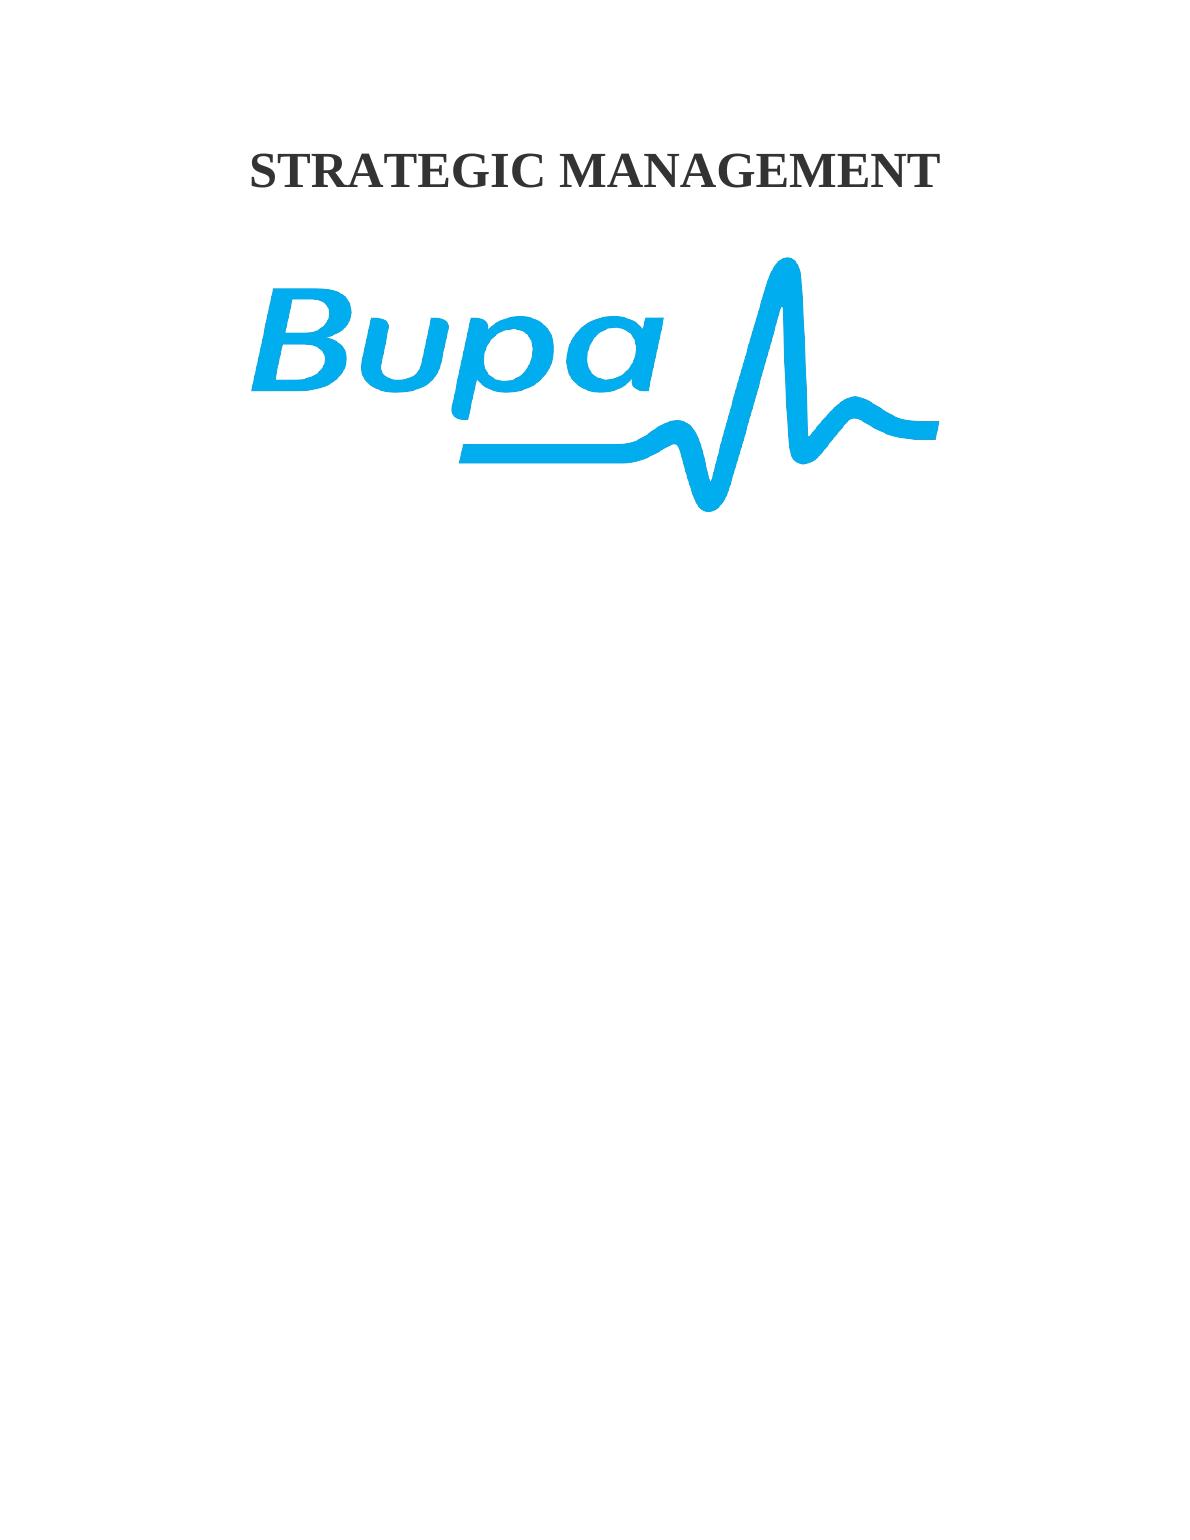 Strategic Management Assignment - Bupa Company_1